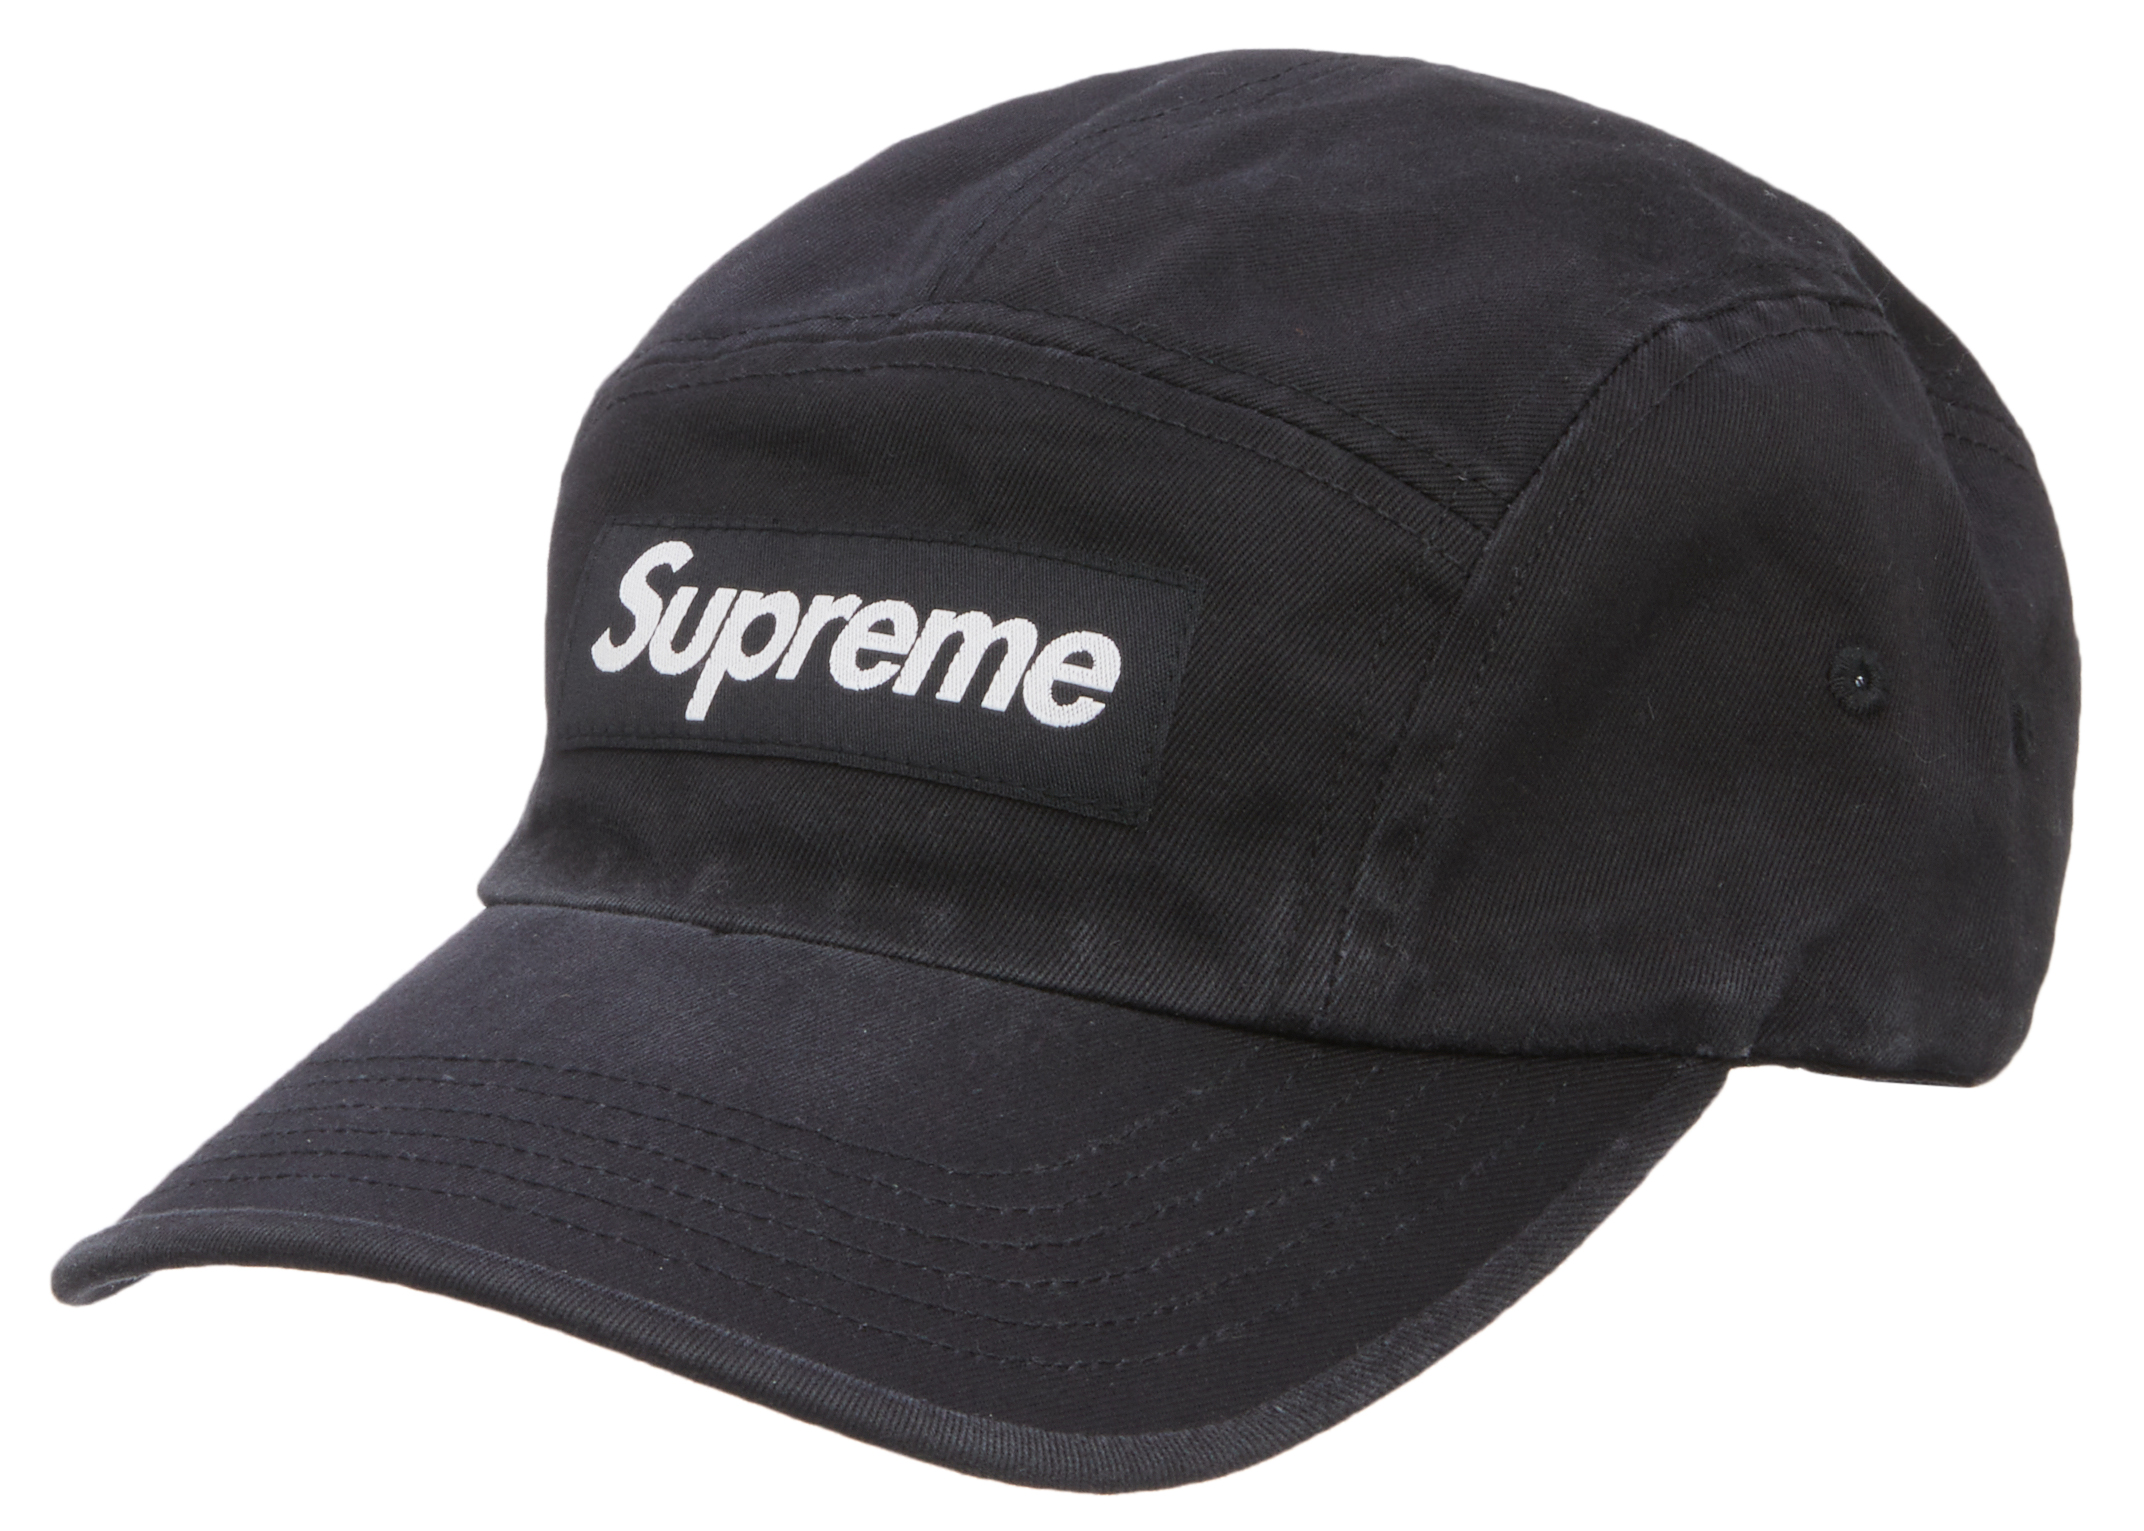 Supreme - Washed Chino Twill Camp Cap キャップ 帽子 メンズ 売り出しお値下